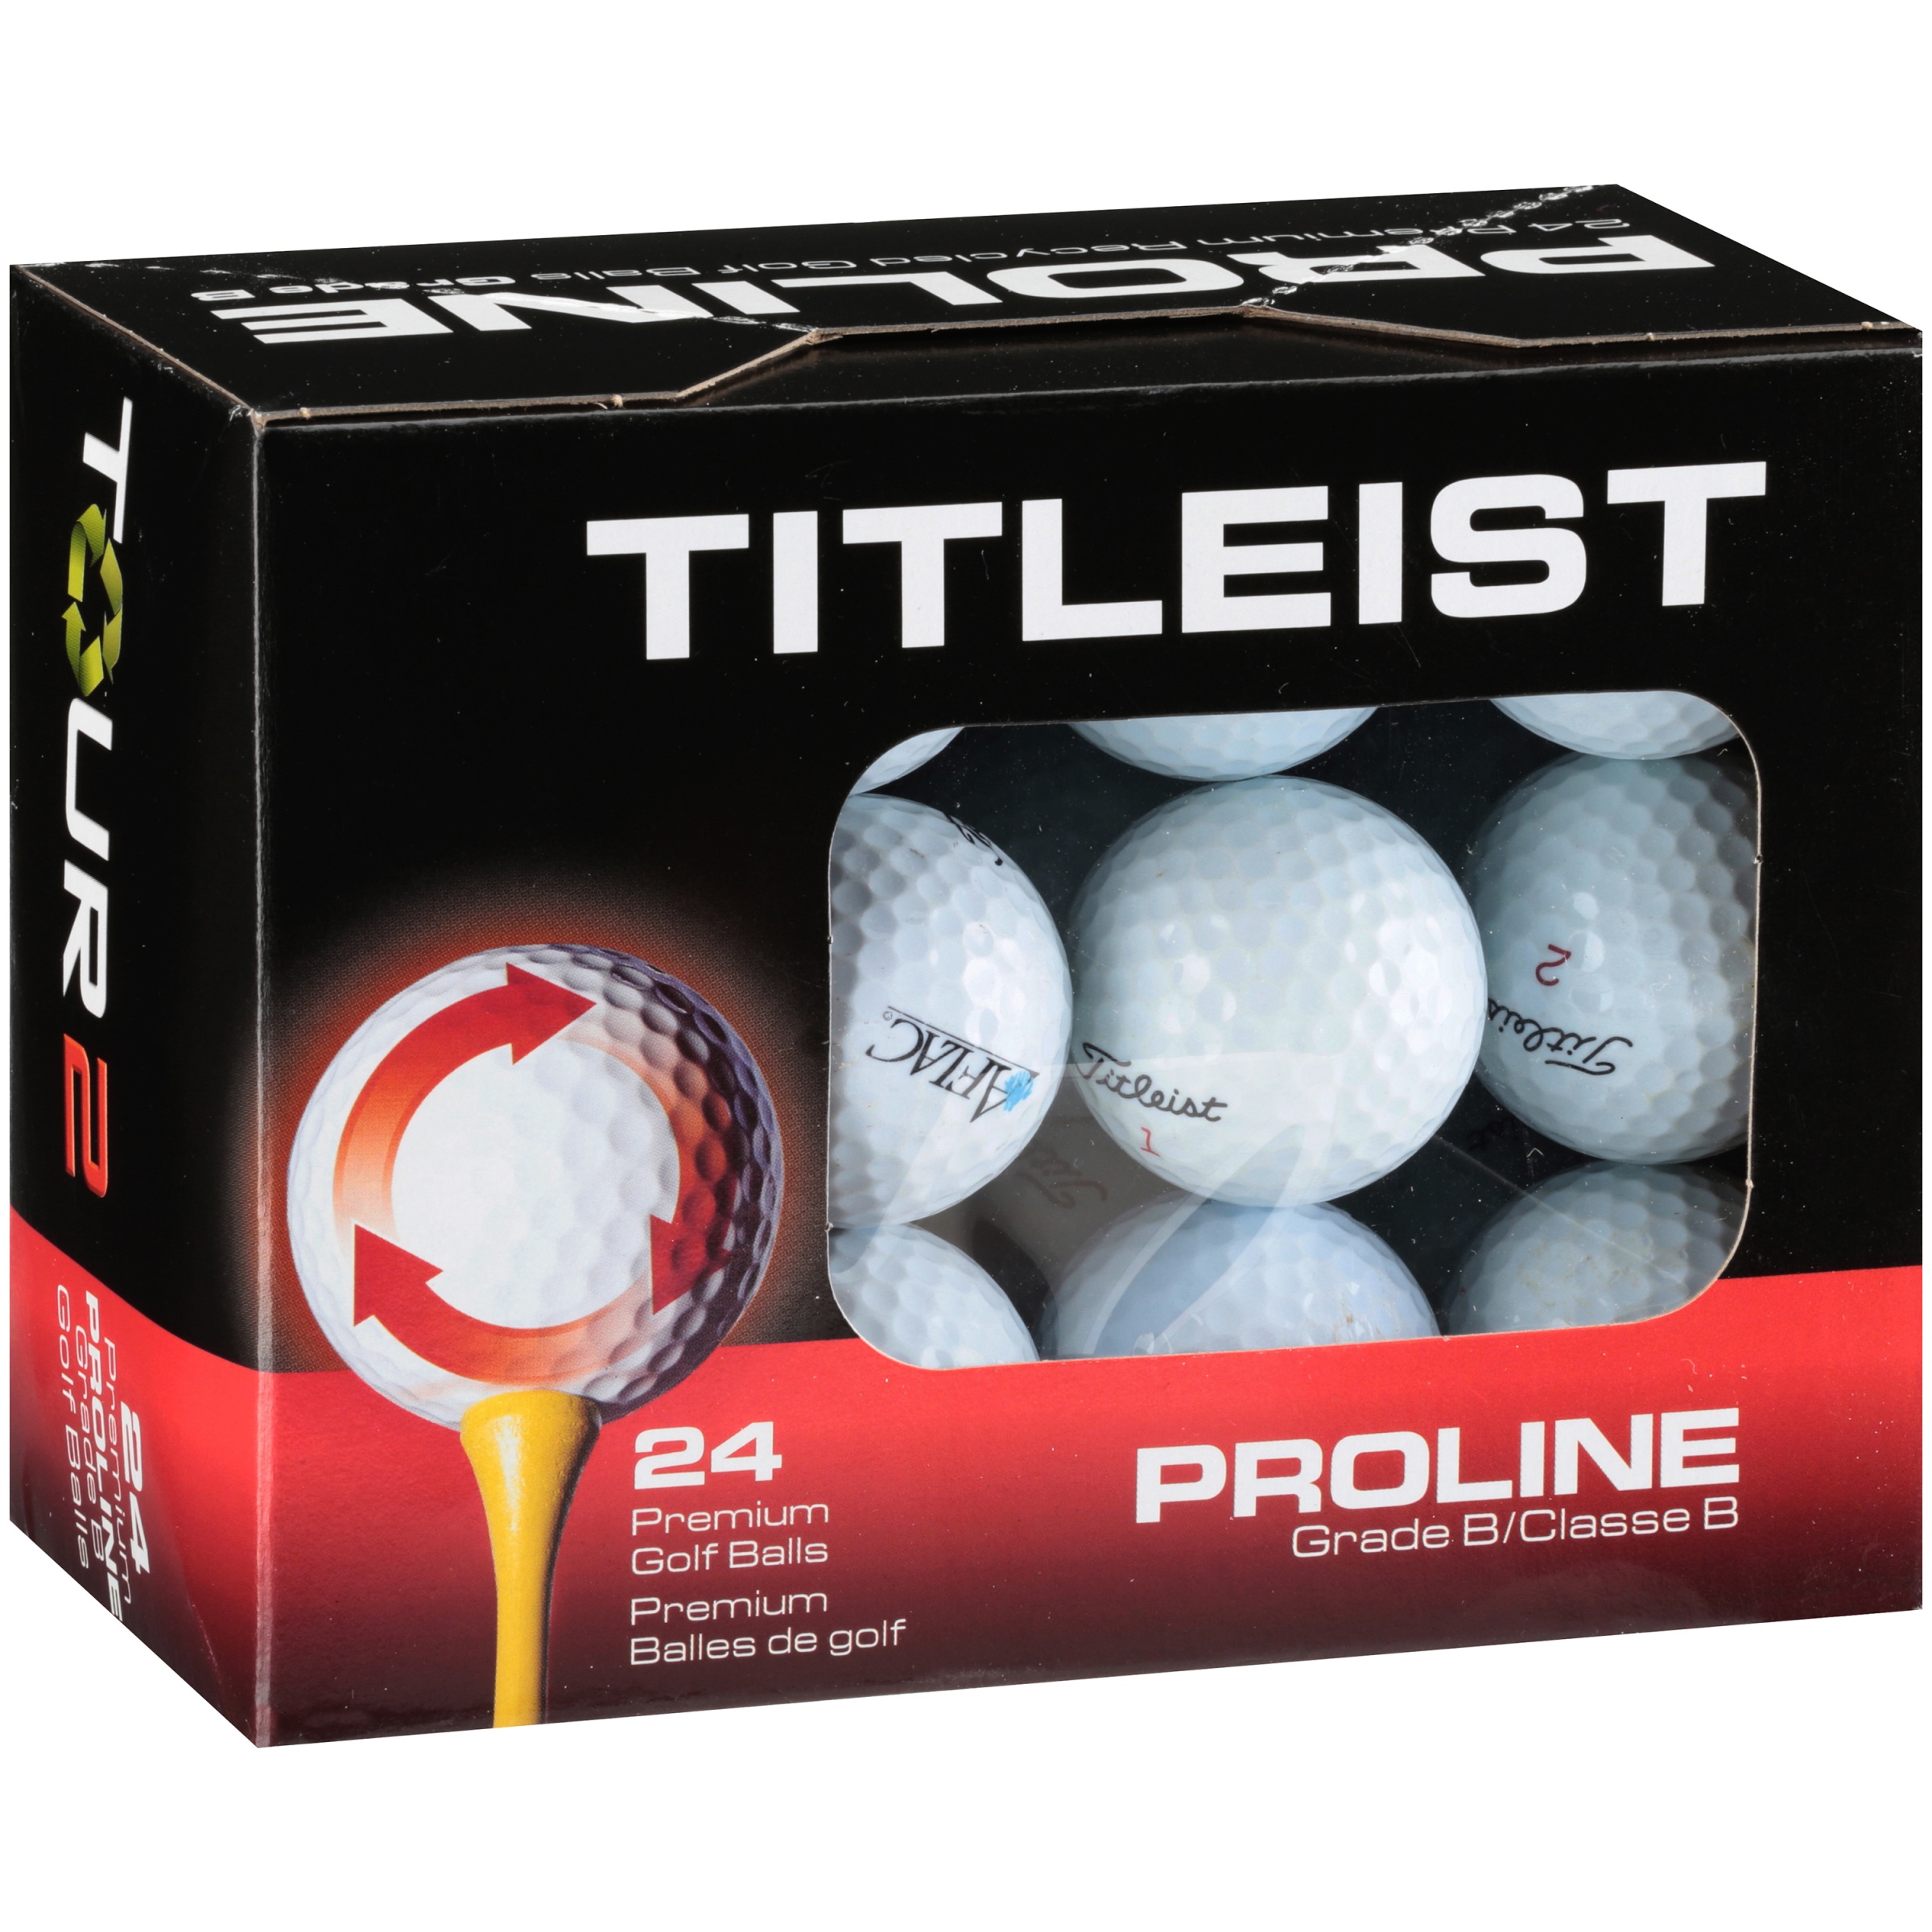 Titleist Proline Golf Balls, 24 Pack - image 4 of 9